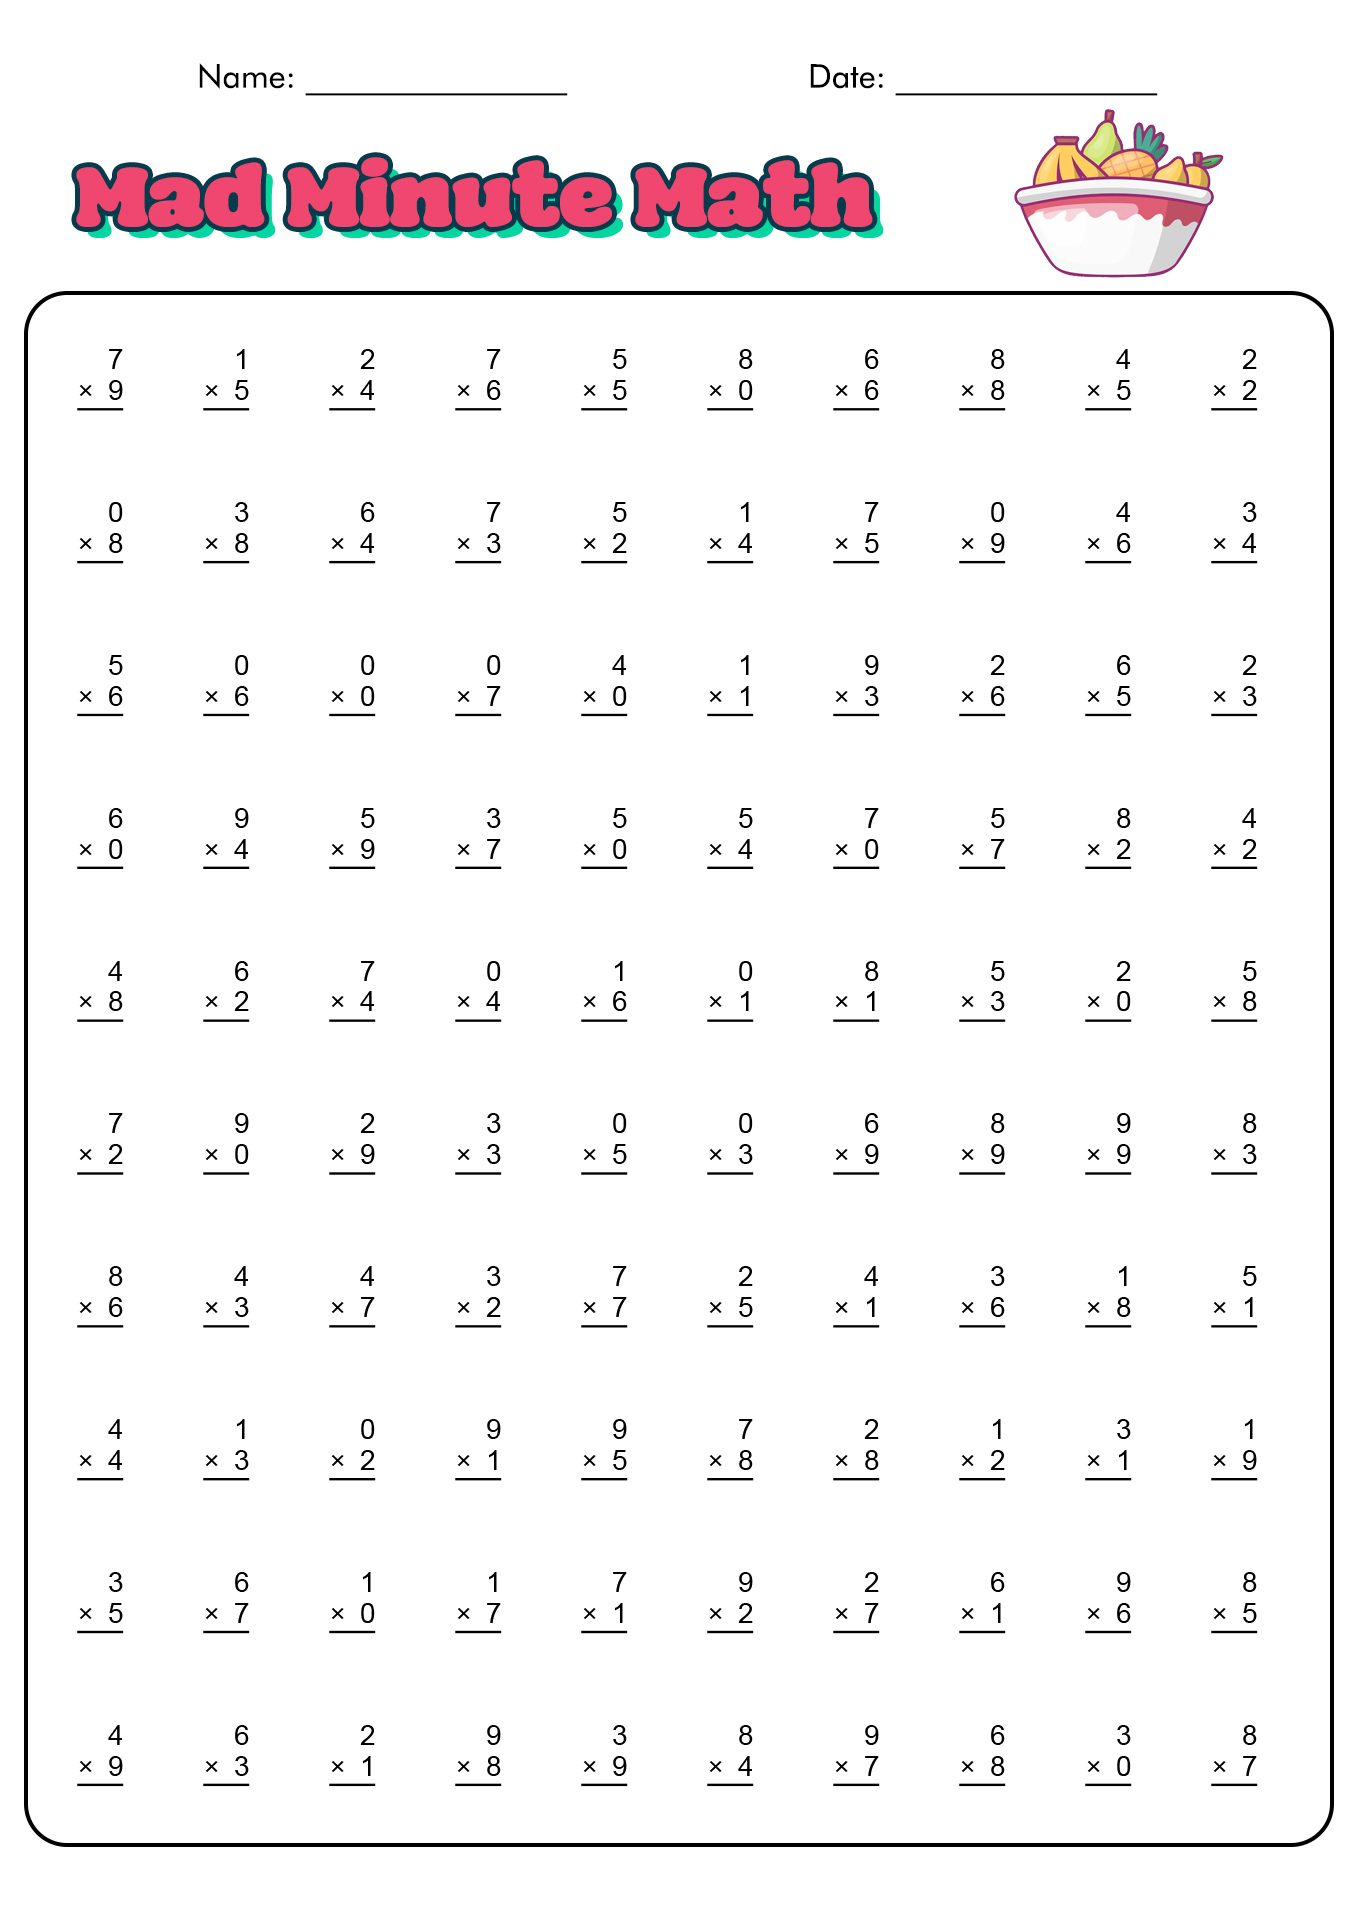 Mad Minute Math Worksheets Printable Image